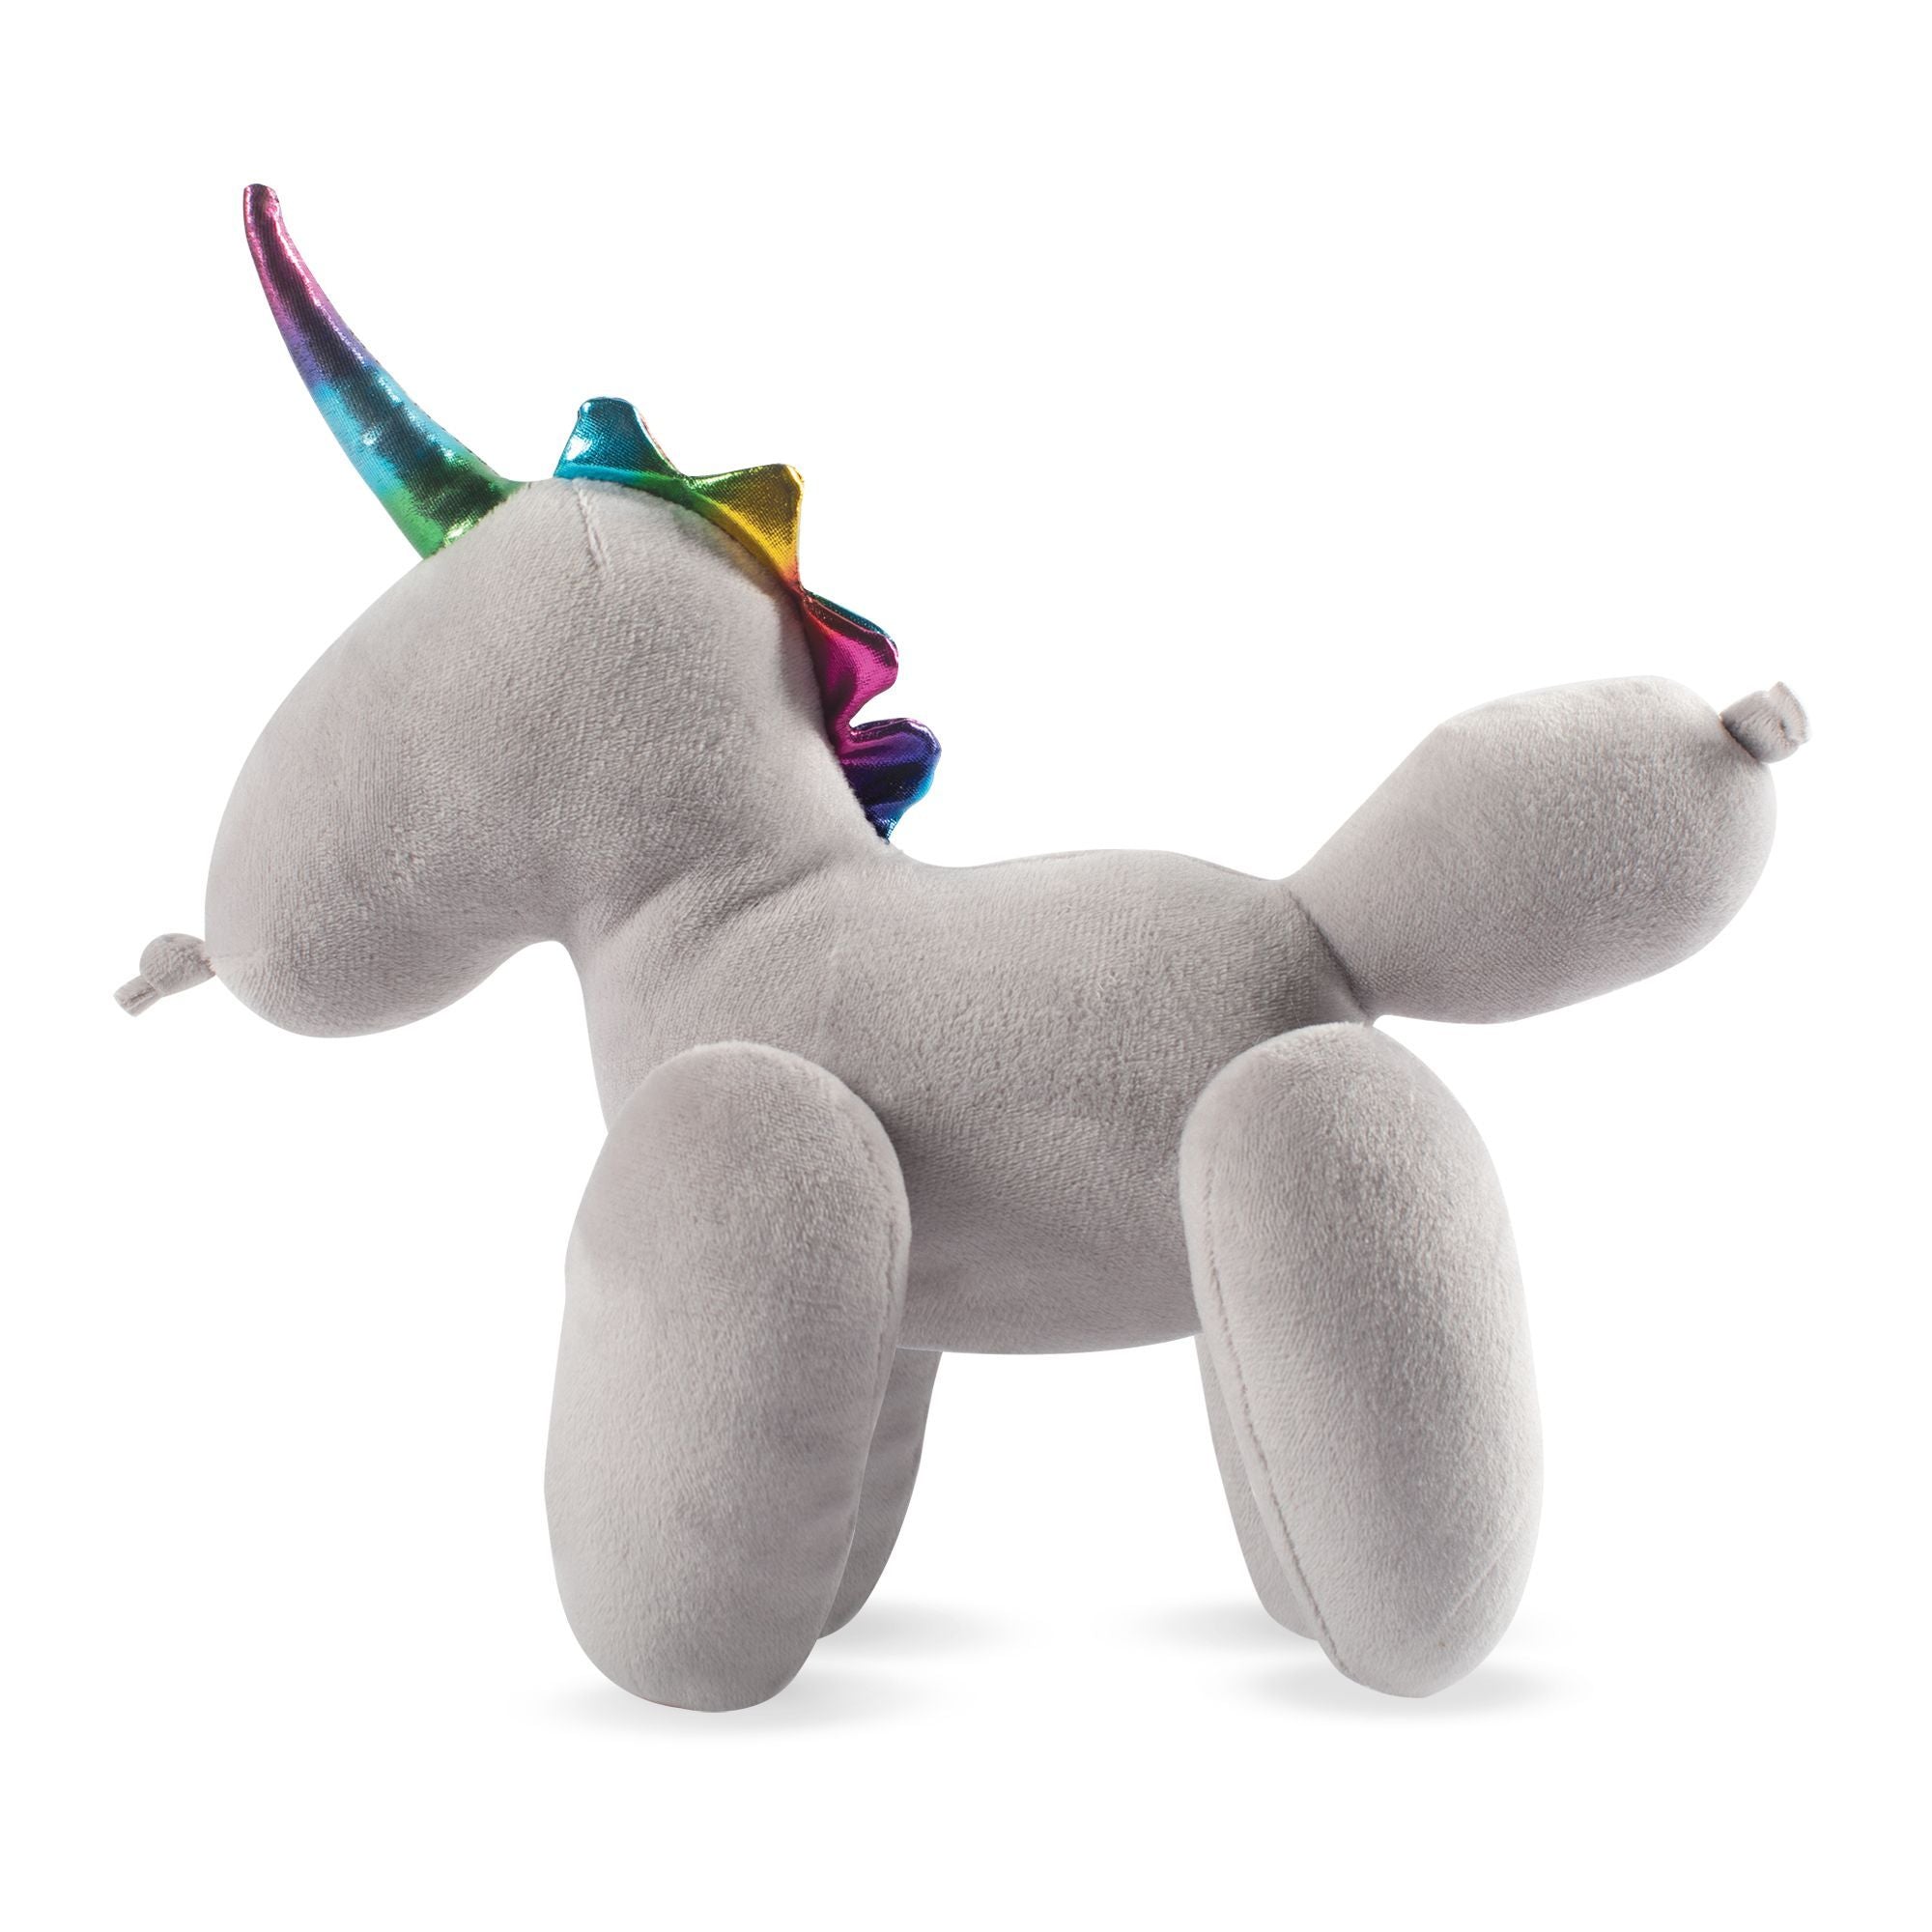 Fringe Studio PetShop Unicorn Balloon Animal  |  Squeaky Plush Toy